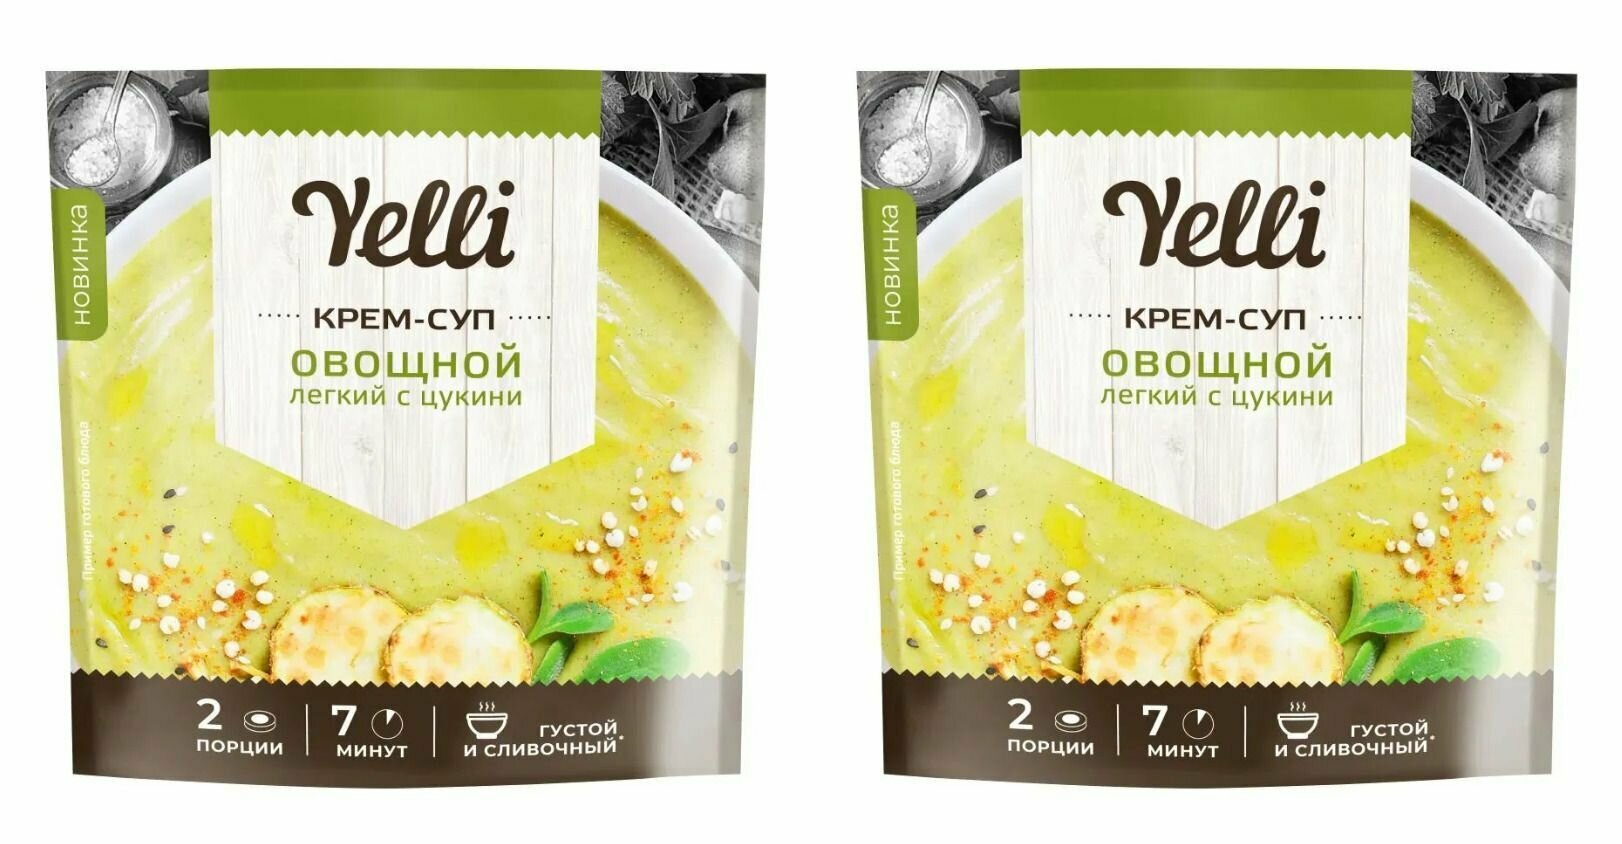 Yelli Крем-суп овощной легкий с цукини, 70 г, 2 уп - фотография № 1